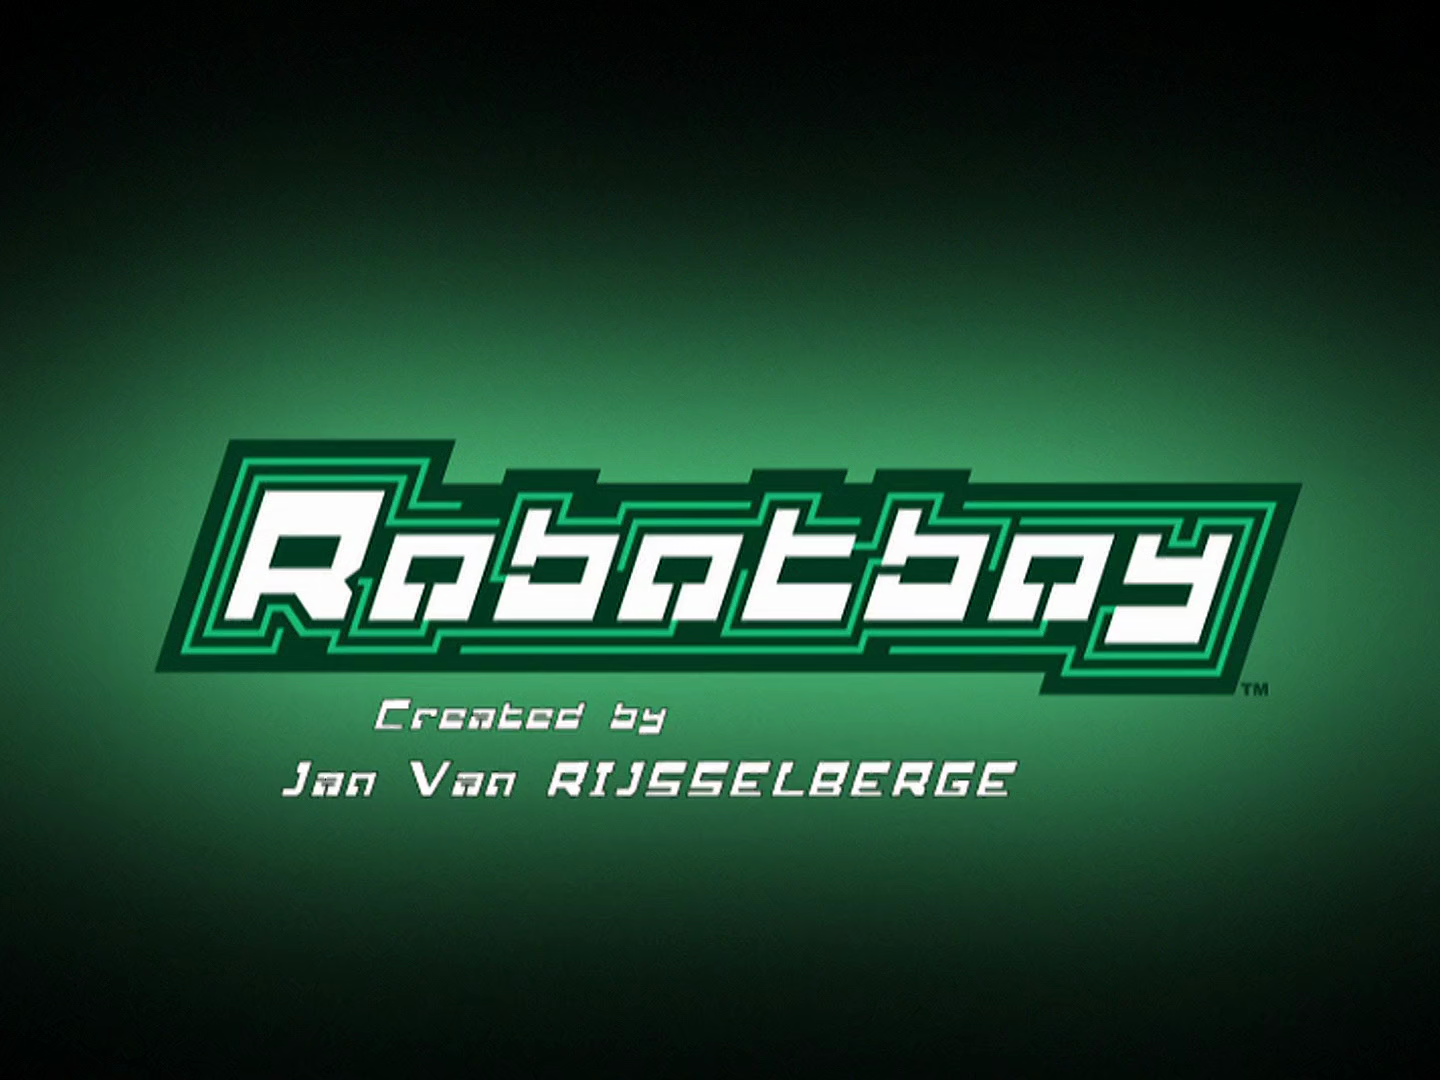 Robotboy - Brother, Season 1, Episode 22, HD Full Episodes